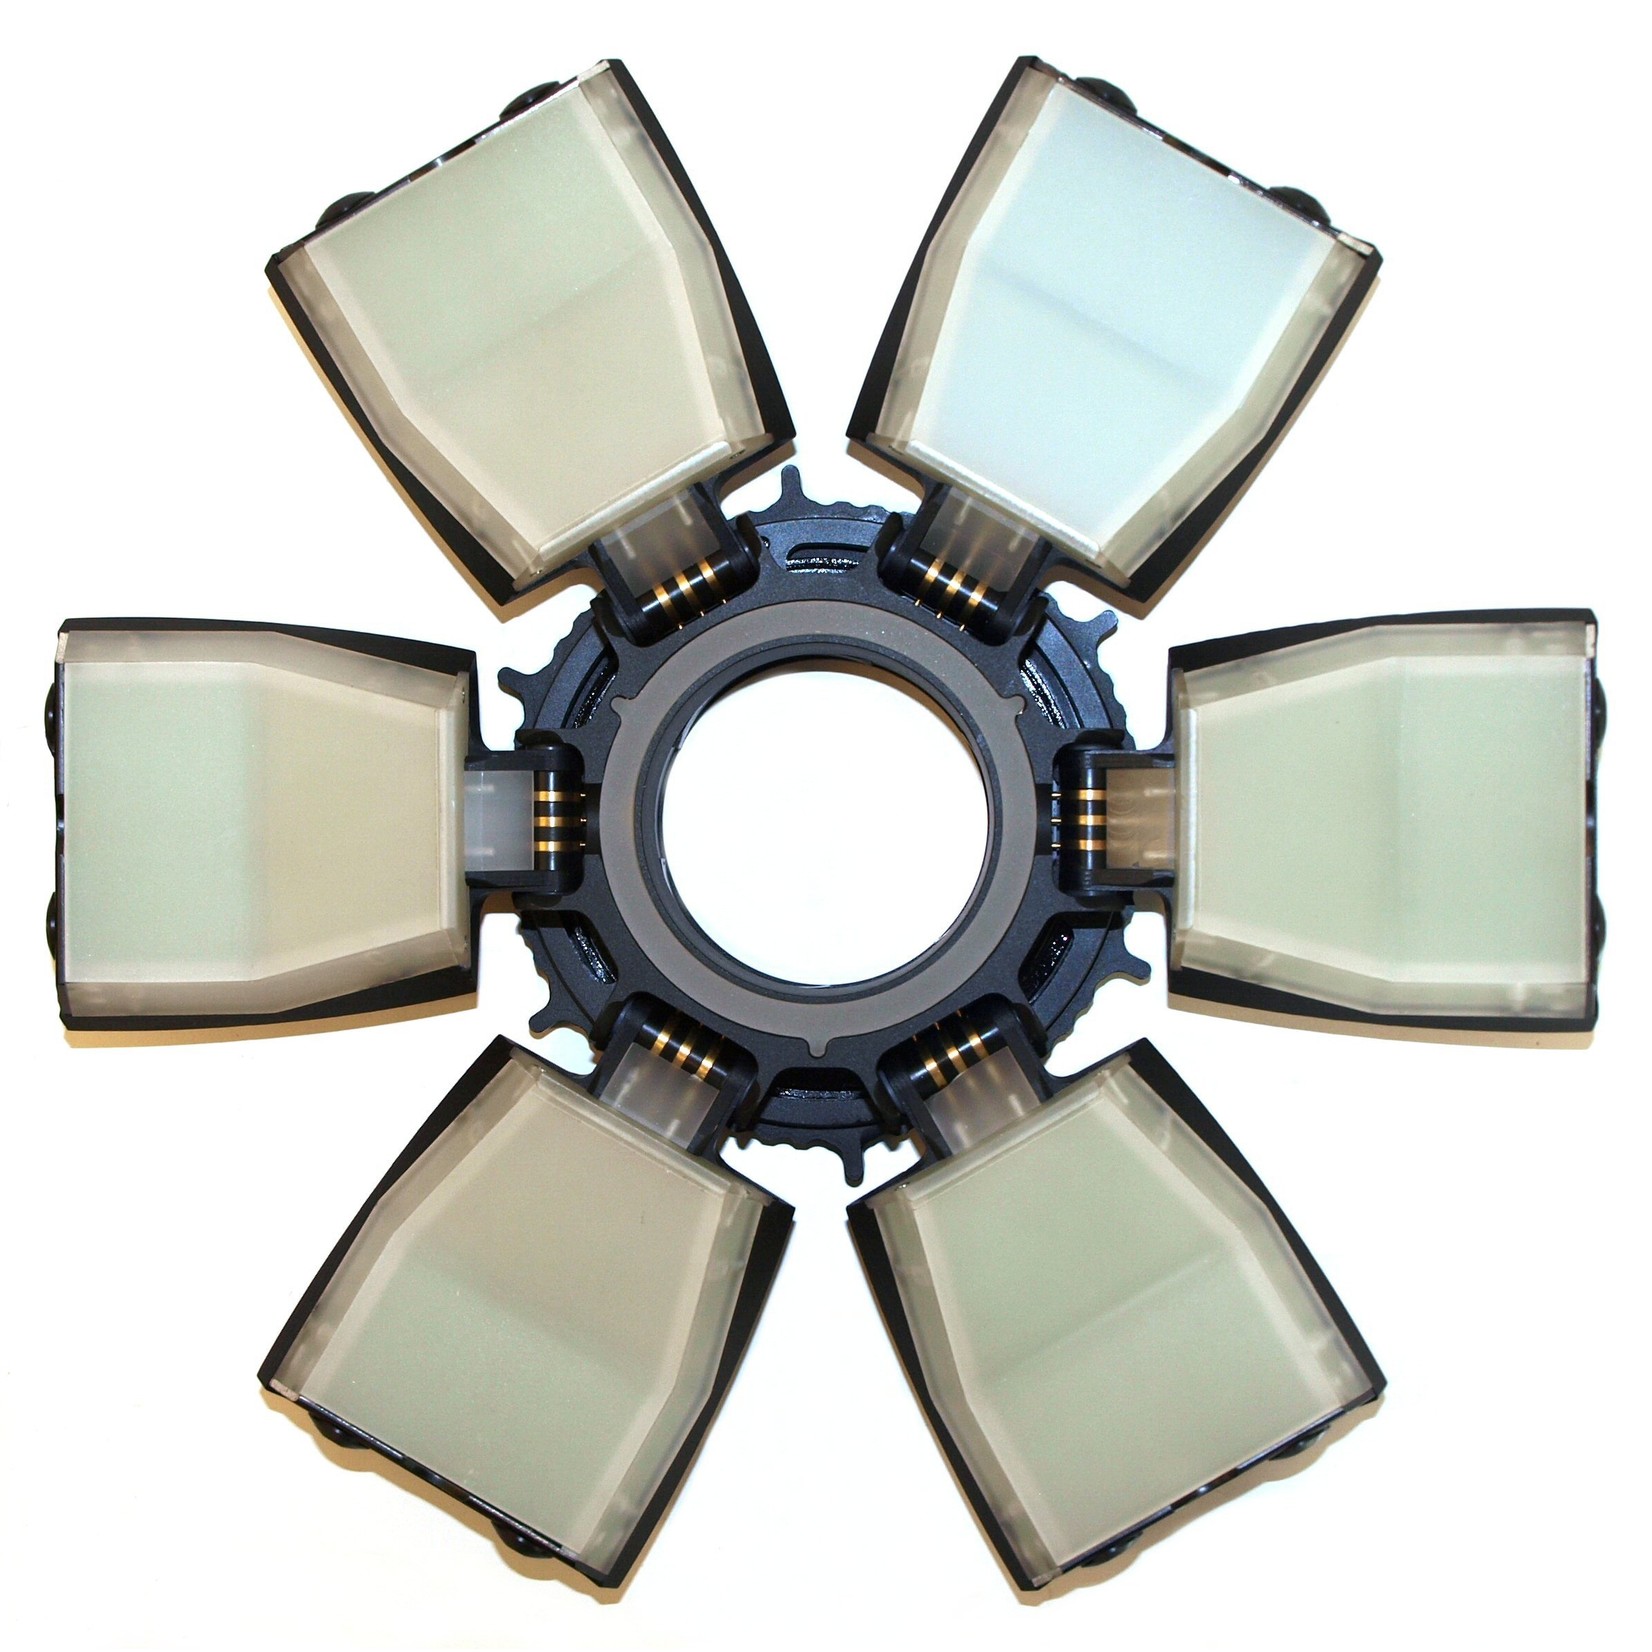 SUNFLOWER stereomicroscope LED illumination